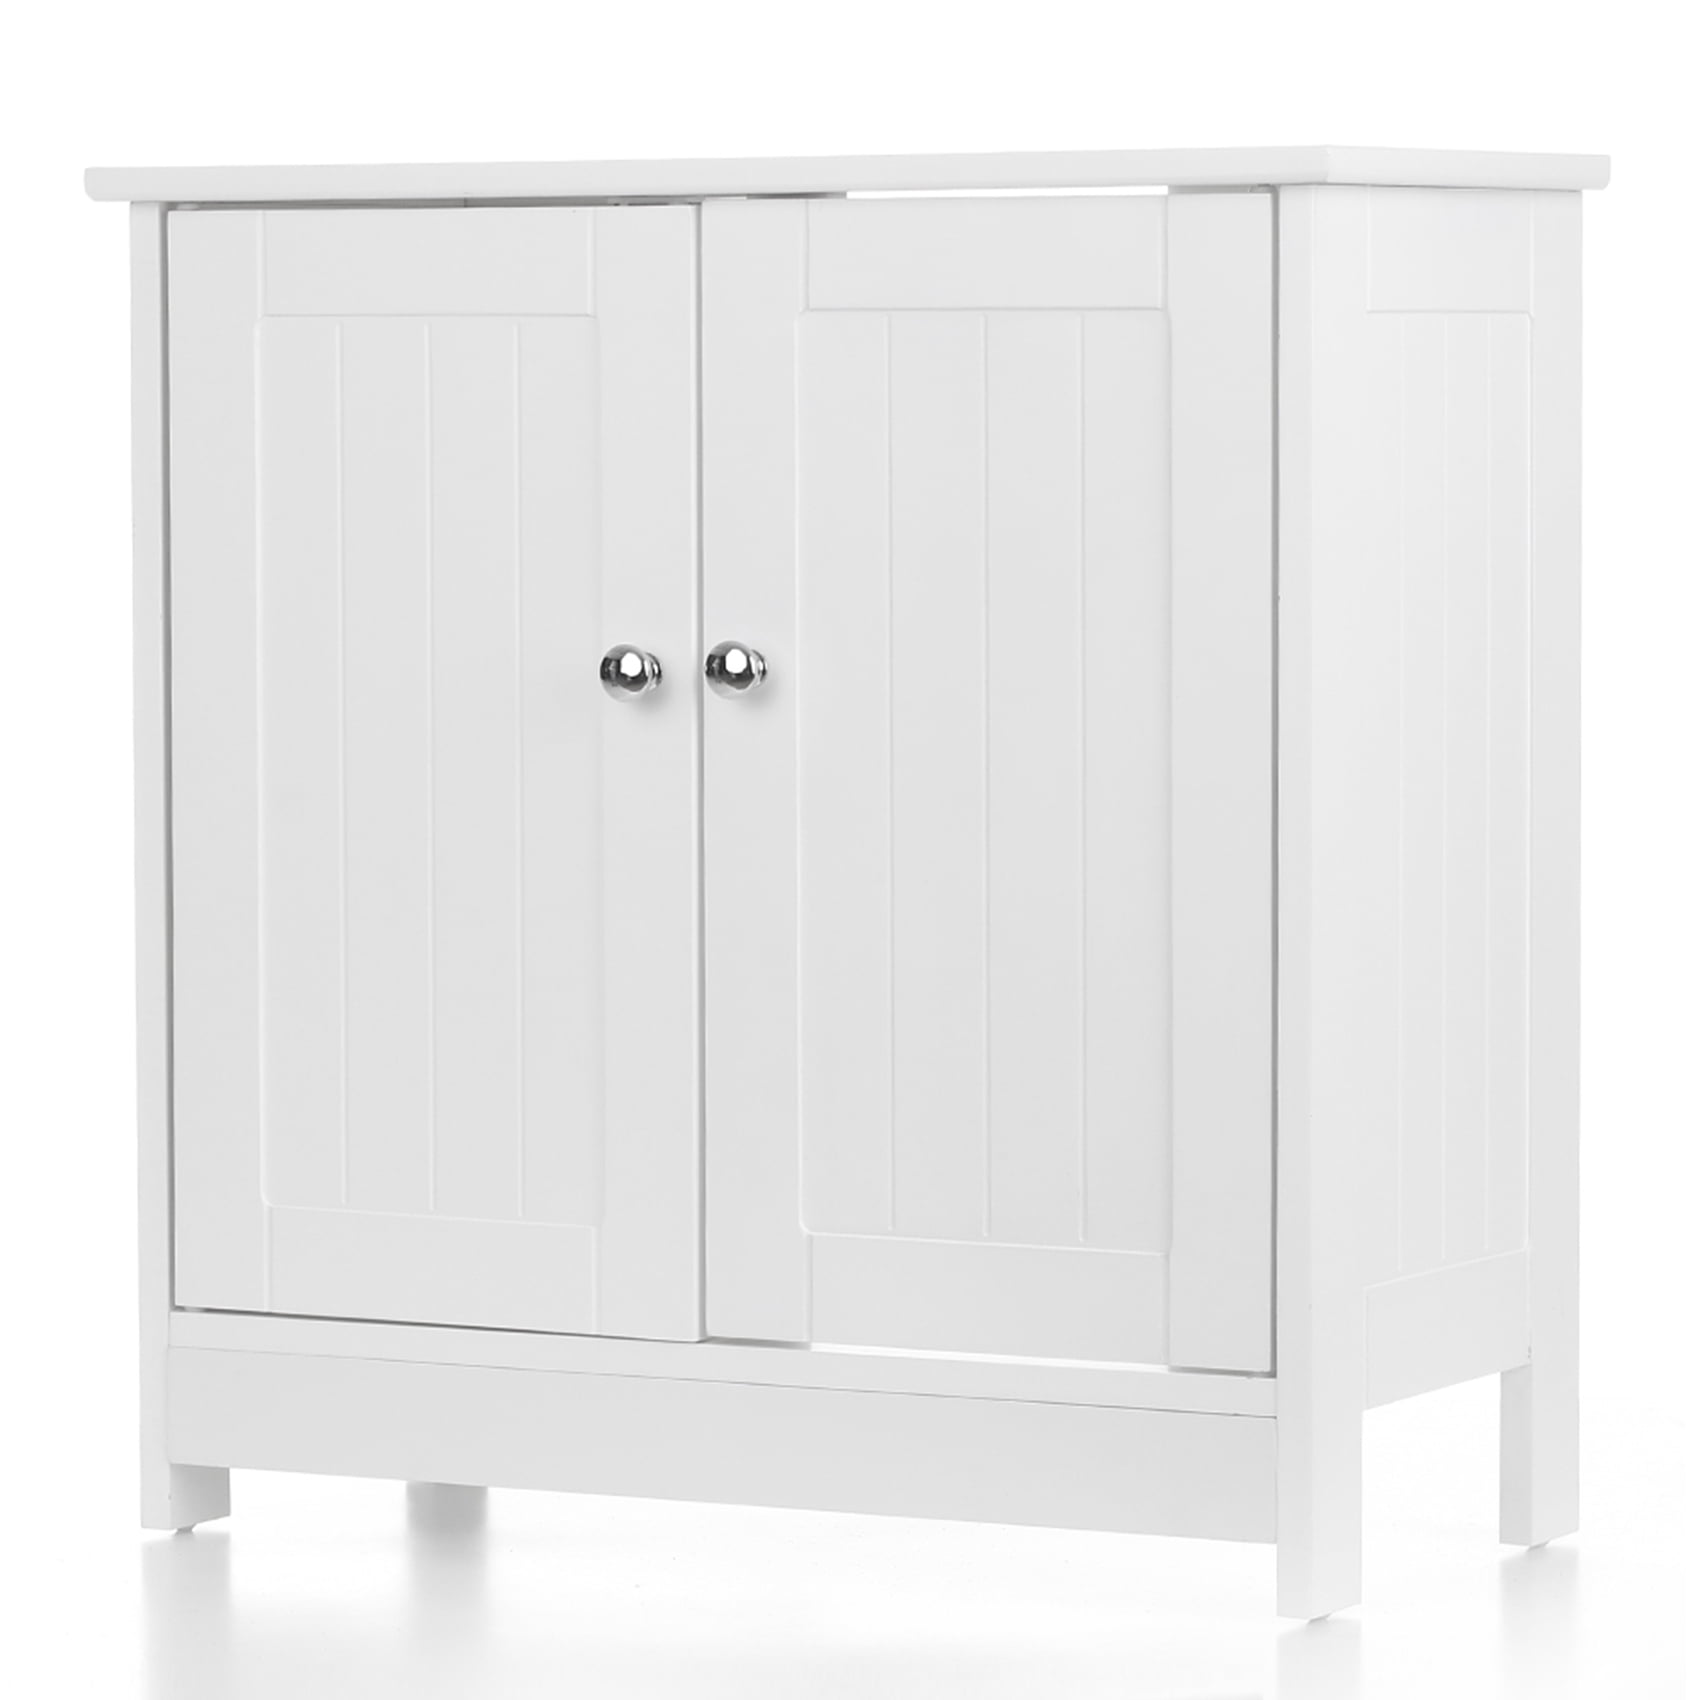 Details about   2 Layers Bathroom Sink Cabinet Under Basin Unit Cupboard Storage Furniture White 